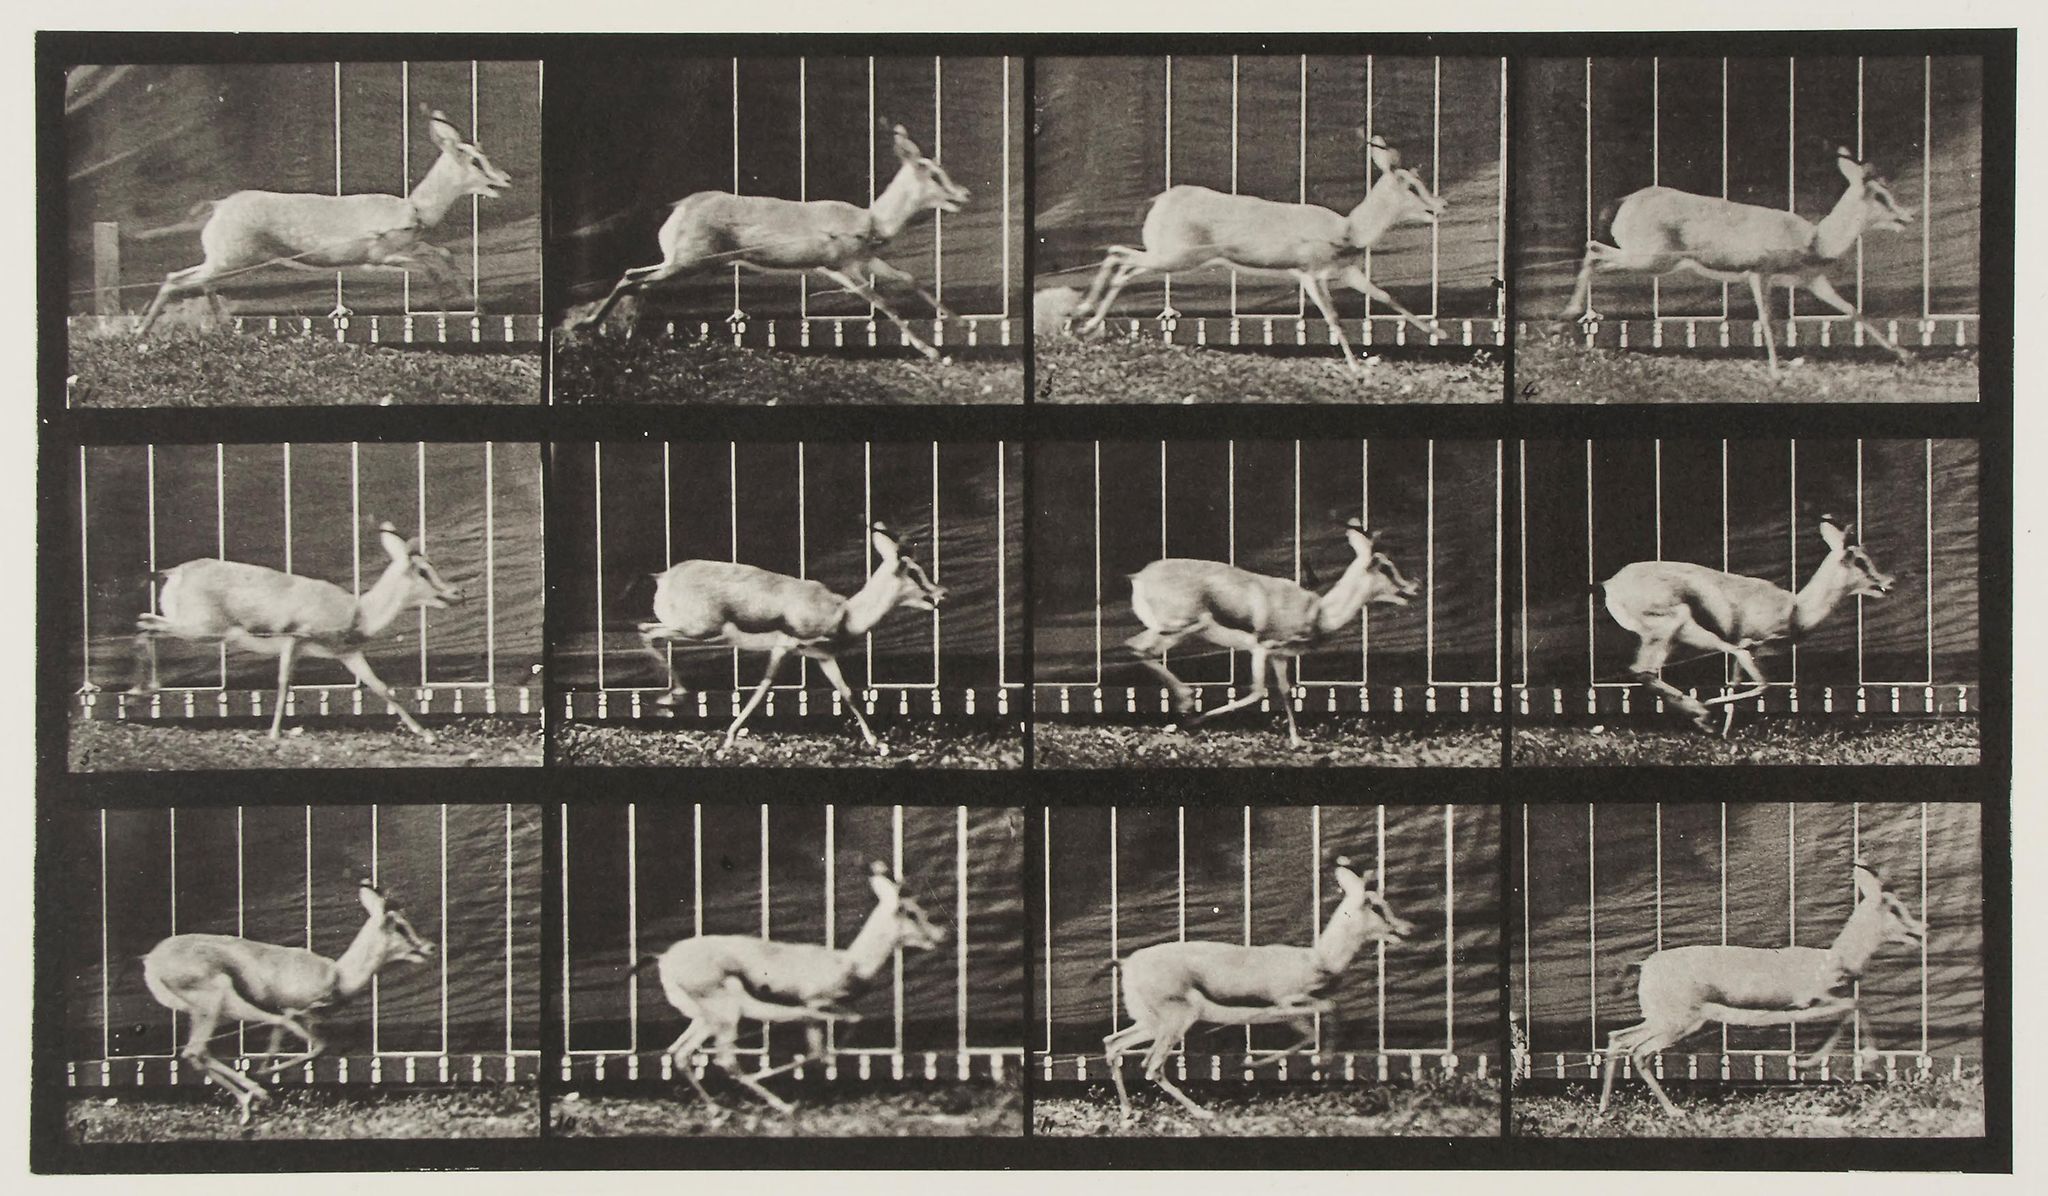 Eadweard Muybridge (1830-1904) - Antelope Trotting, Plate 698, 1887 Collotype from Animal